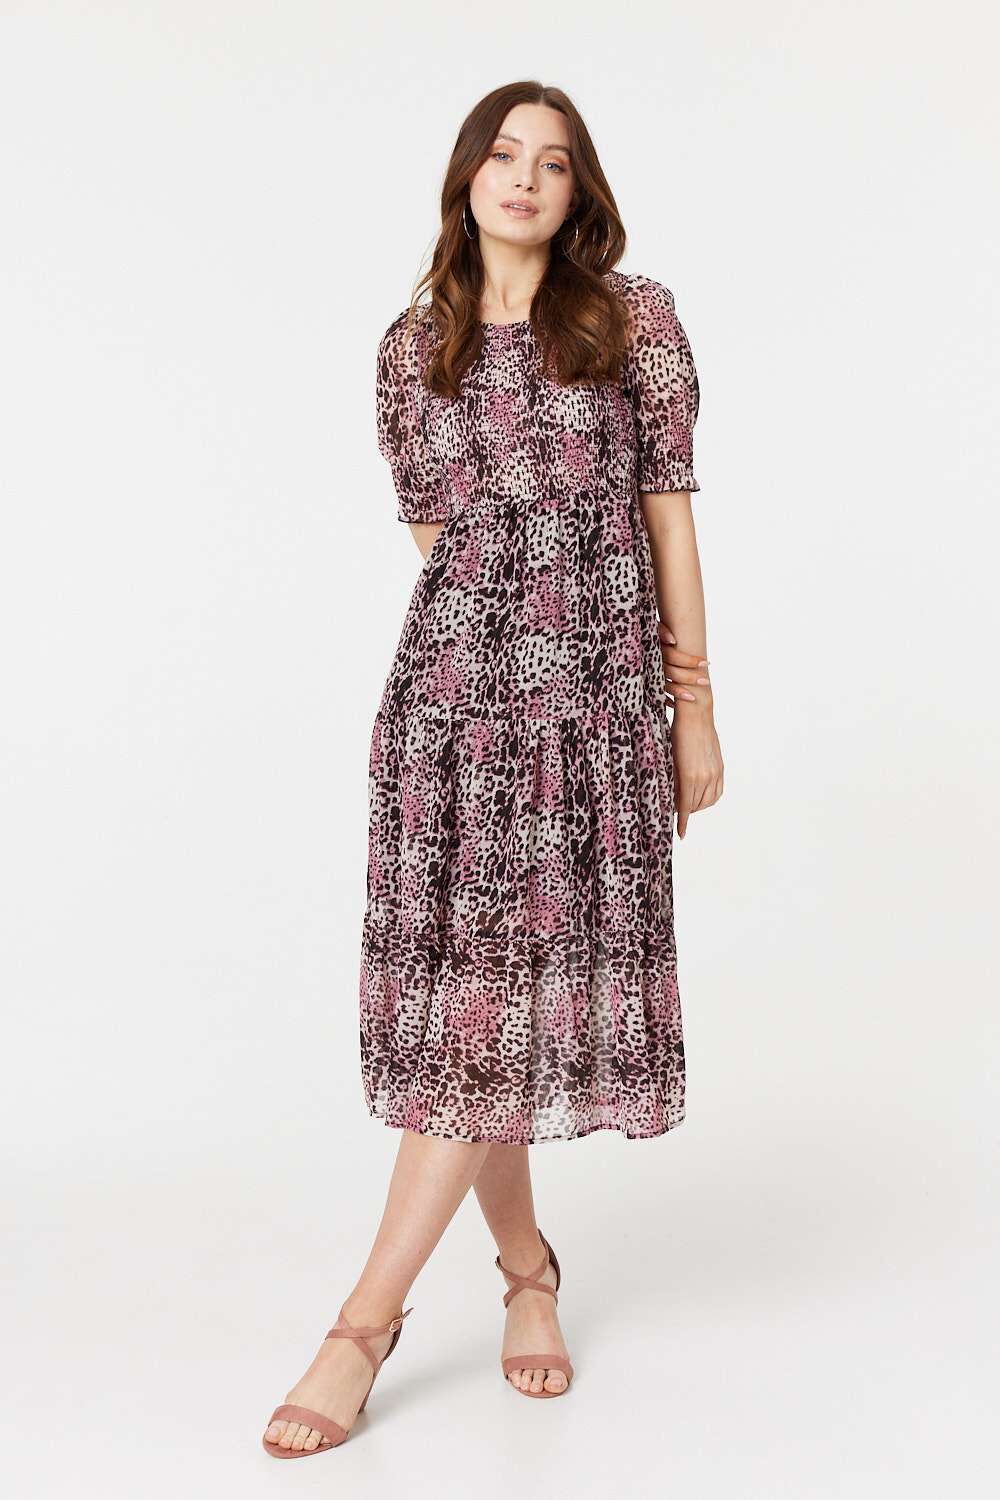 Izabel London Pink - Animal Print Midi Smock Dress, Size: 12